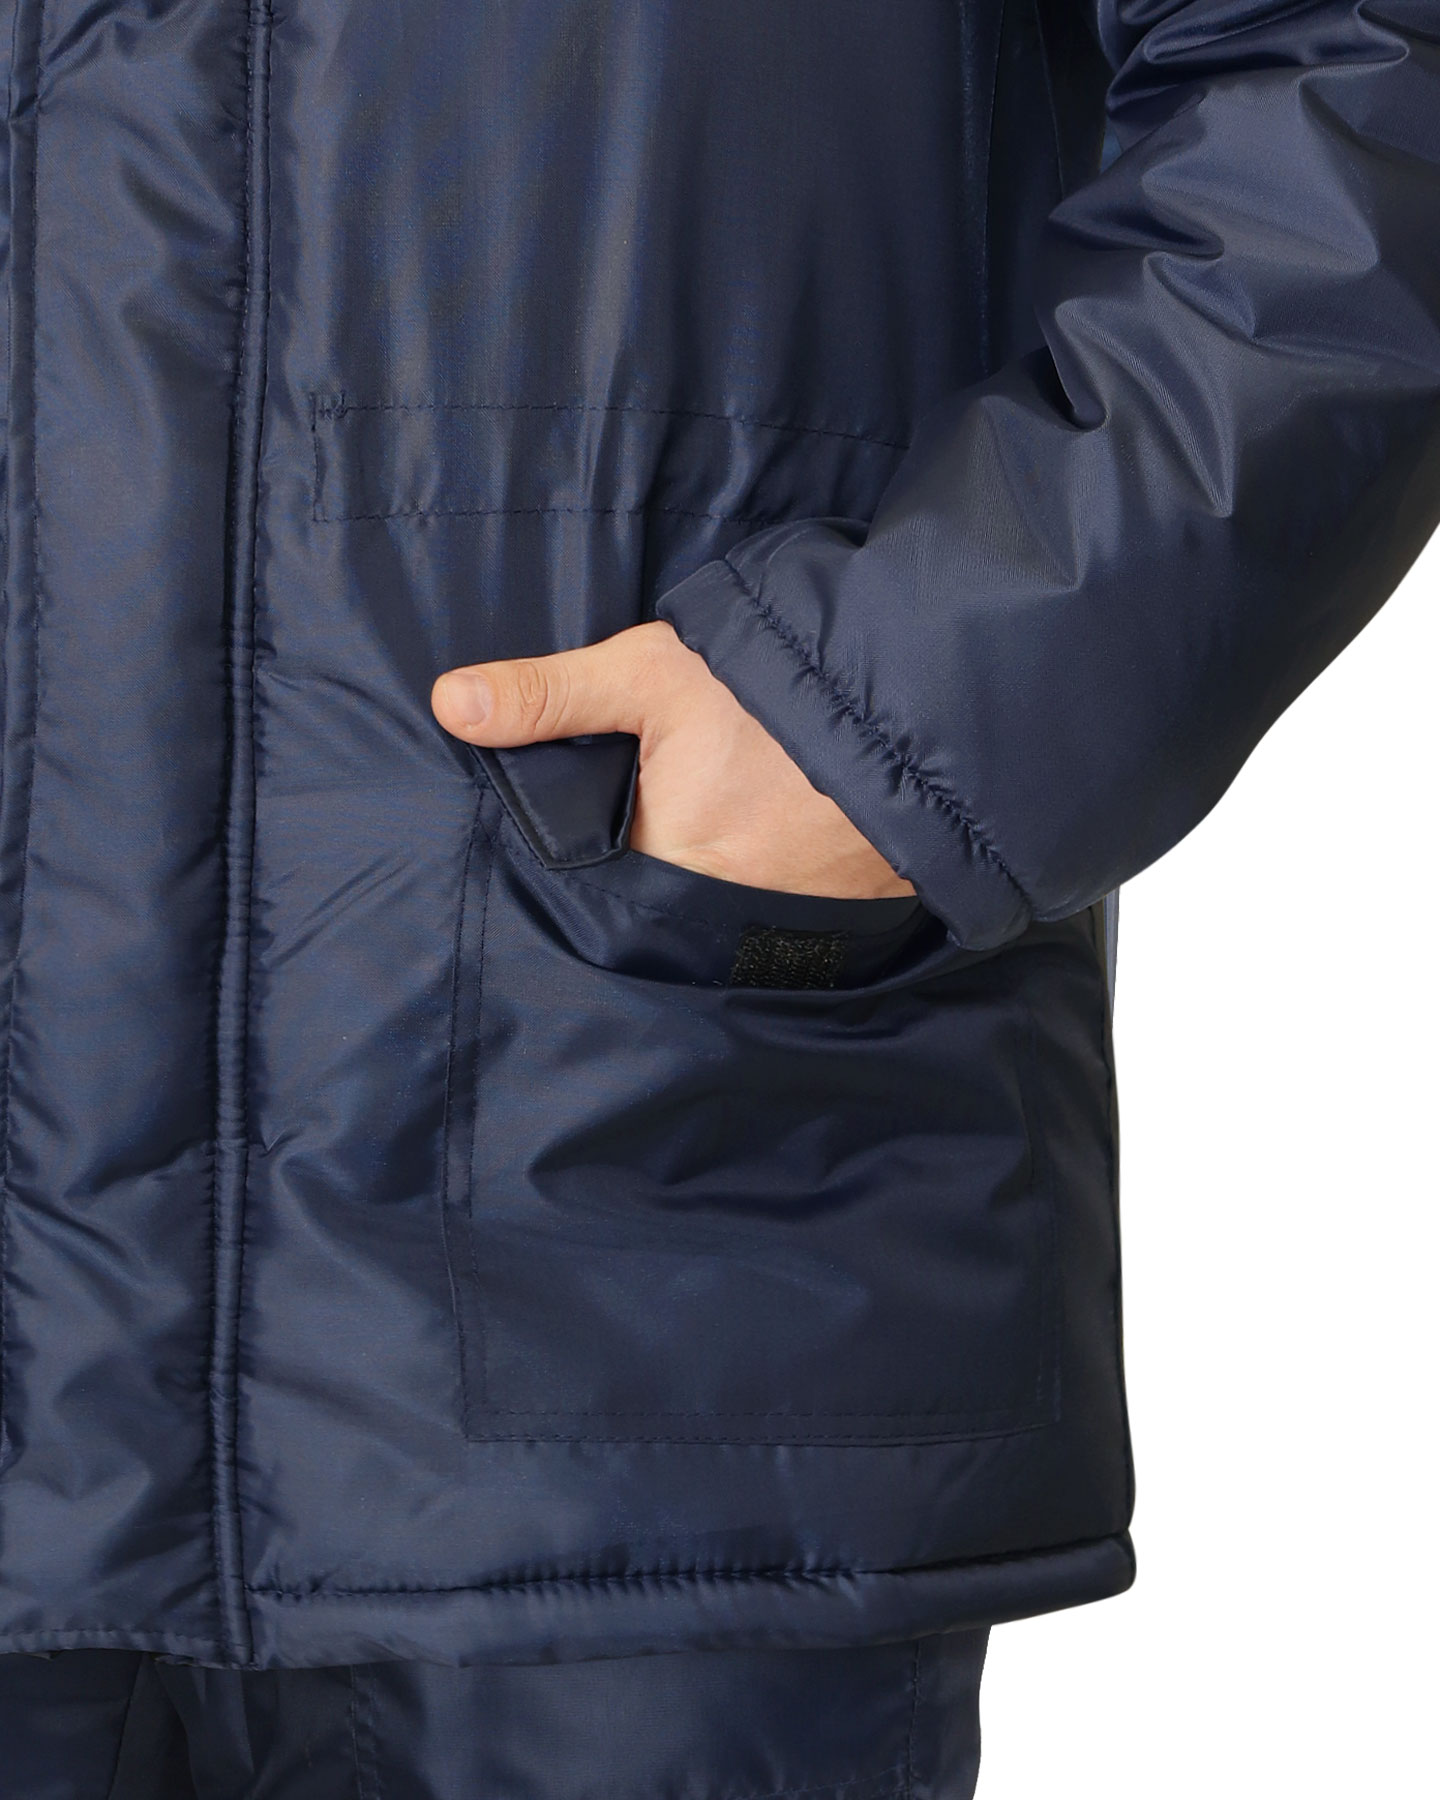 Куртка зимняя Бригадир (тк.Оксфорд) СИРИУС, т.синий/васильковый (112768)